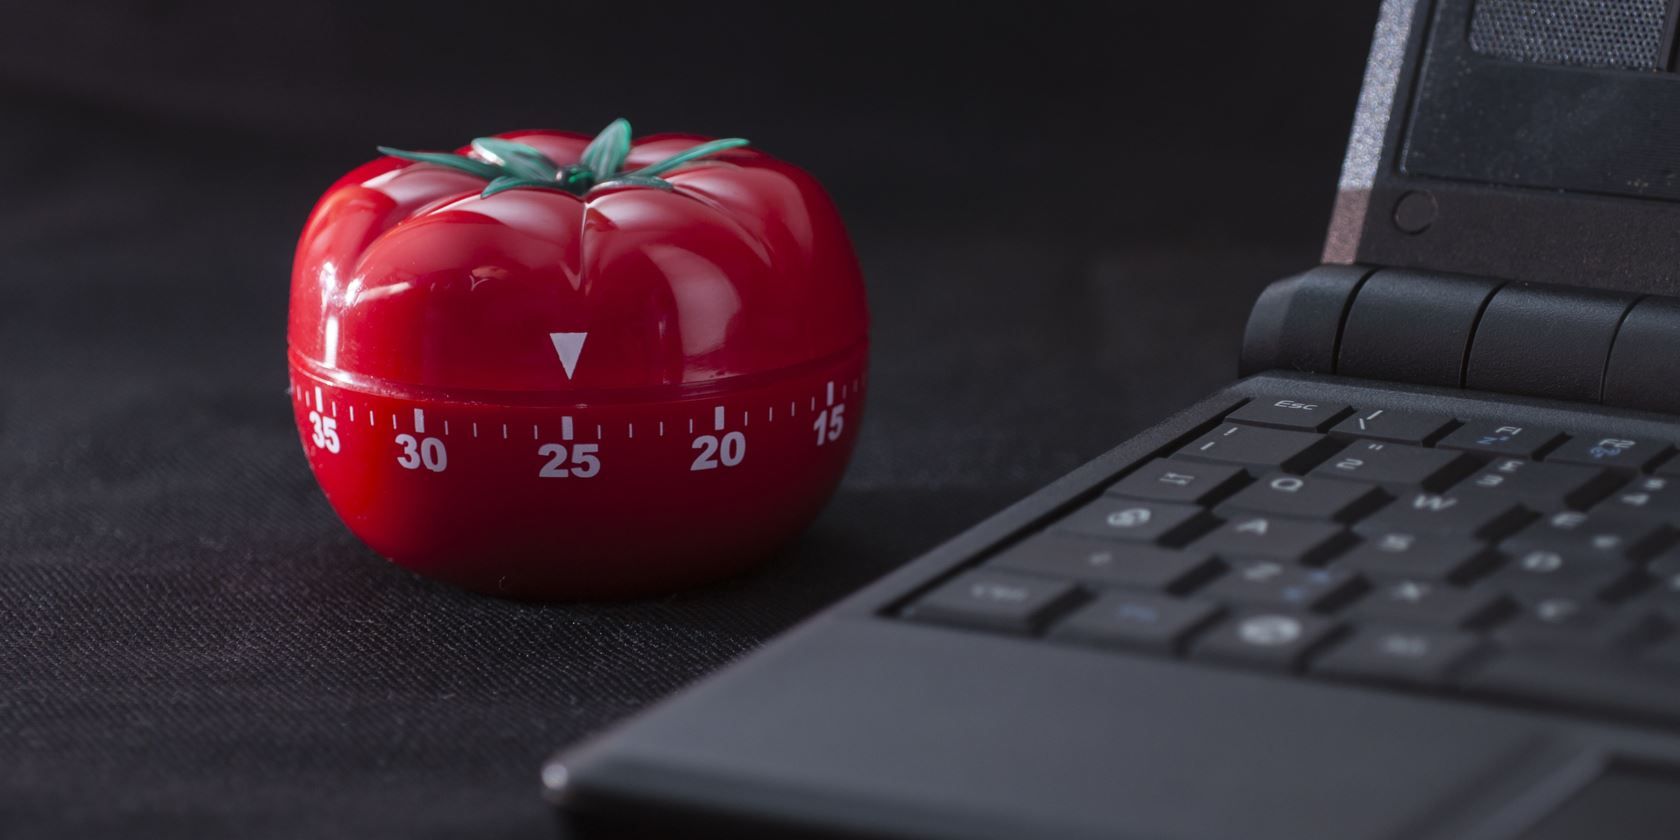 Pomodoro timer device beside a laptop